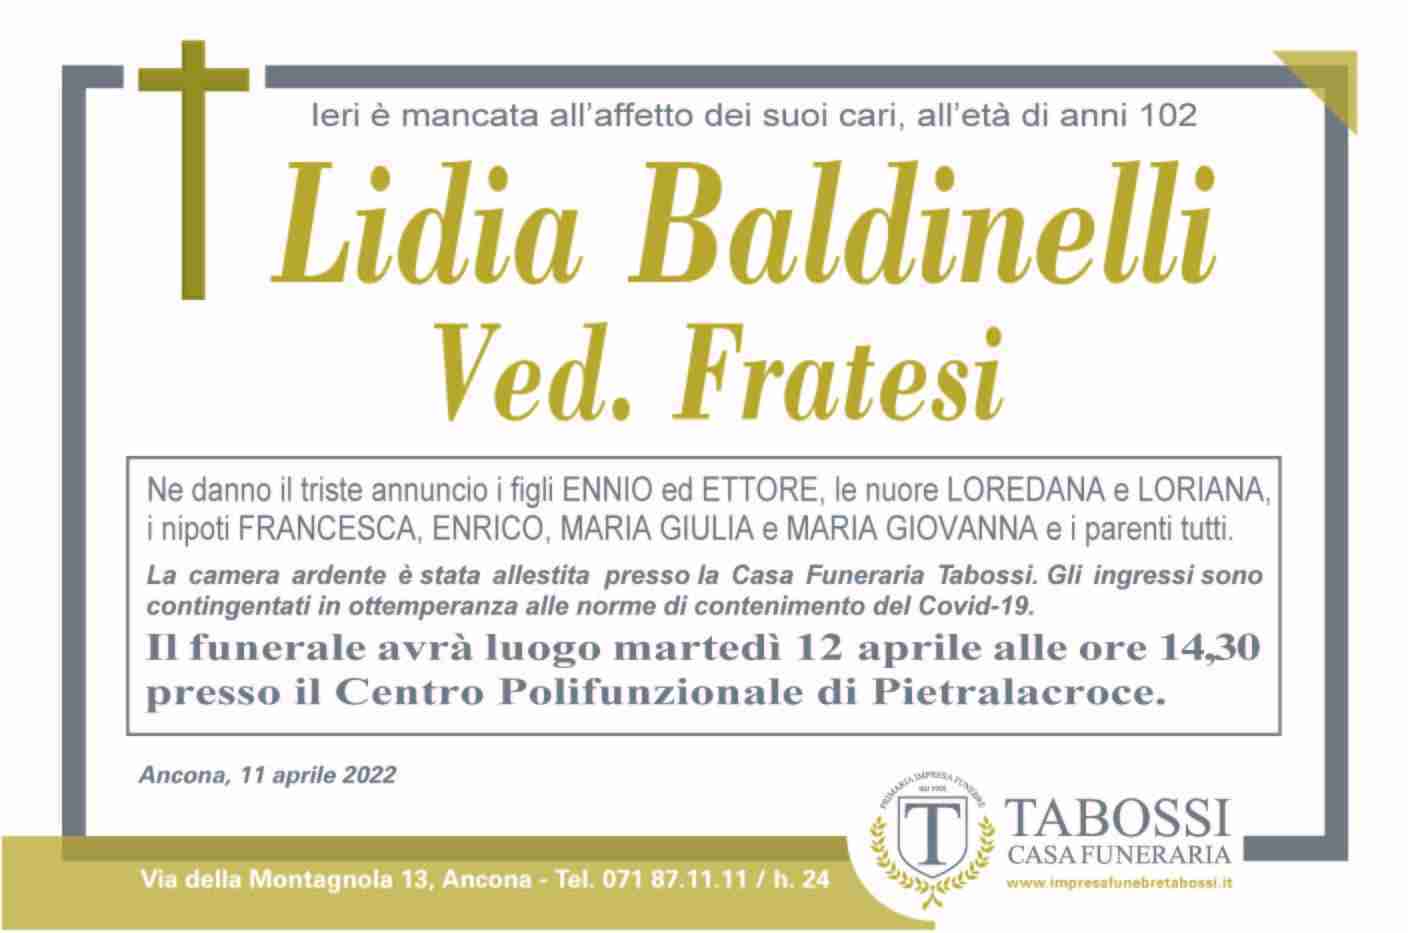 Lidia Baldinelli